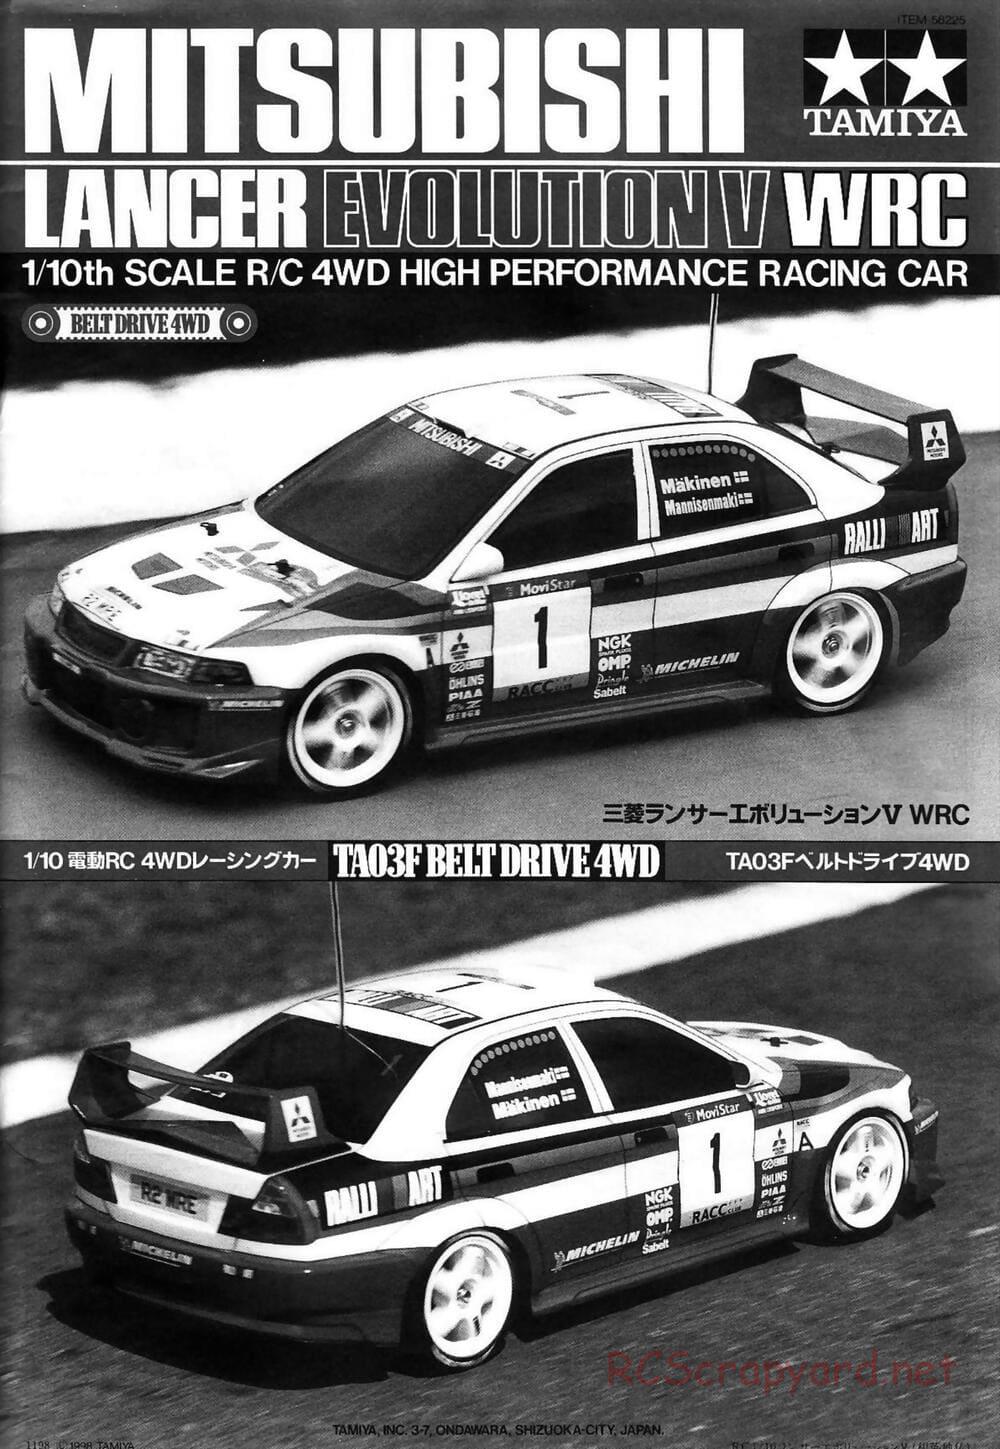 Tamiya - Mitsubishi Lancer Evolution V WRC - TA-03F Chassis - Manual - Page 1